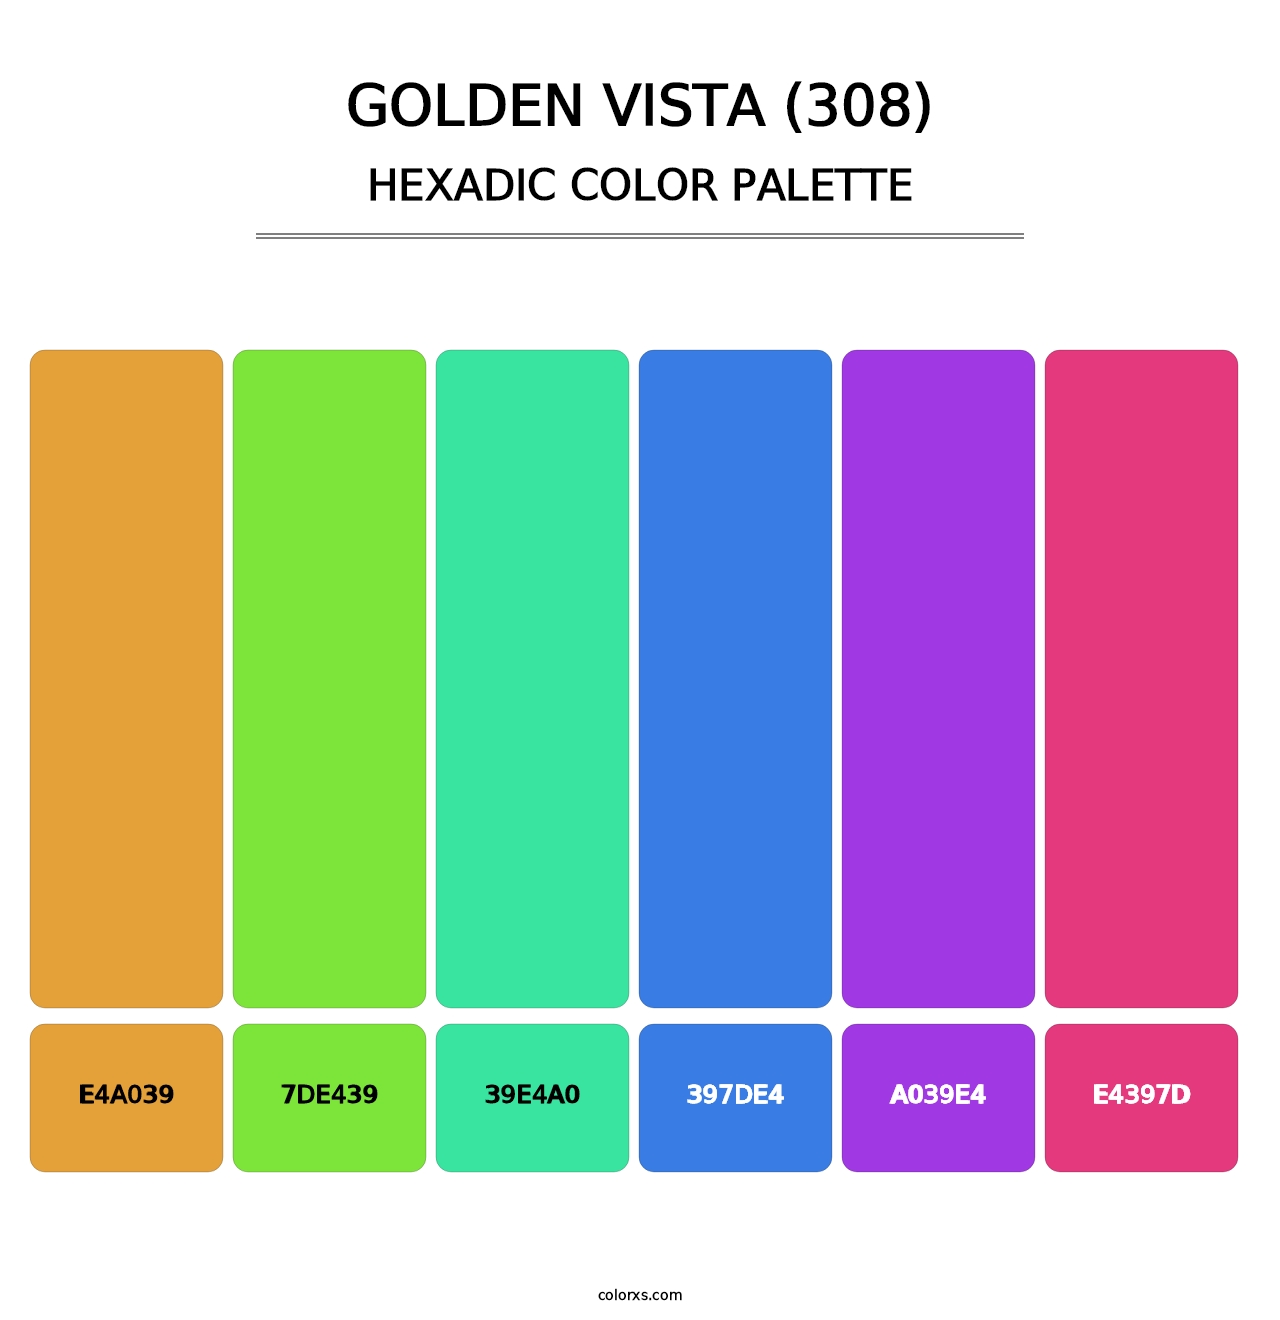 Golden Vista (308) - Hexadic Color Palette